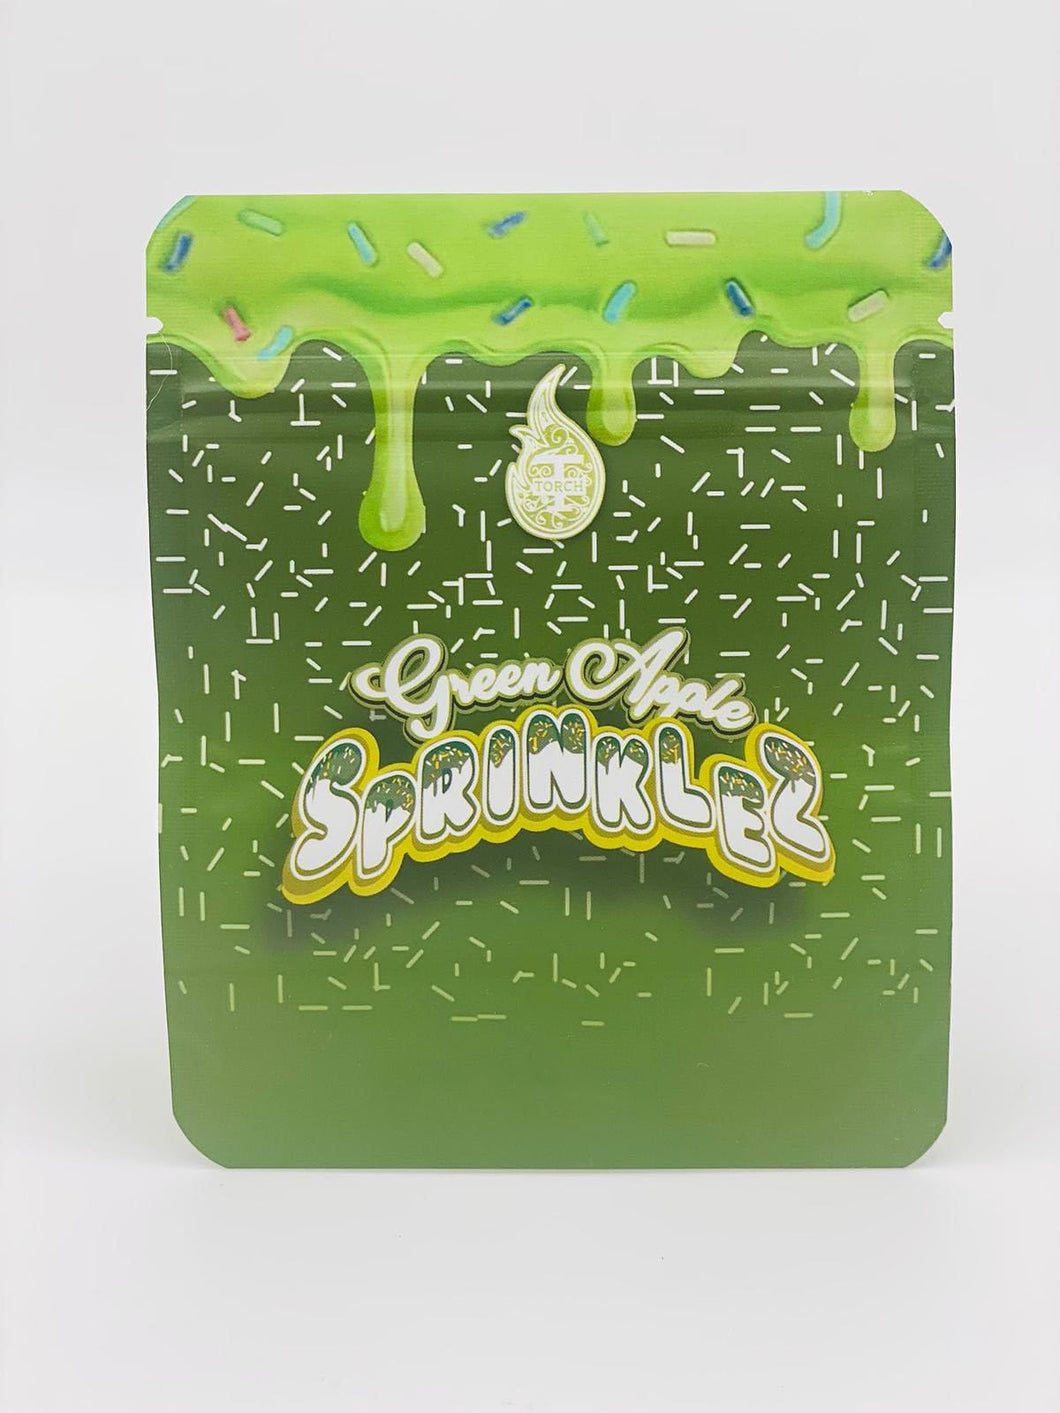 50 Green Apple Sprinklez 3.5 gram empty Mylar bags